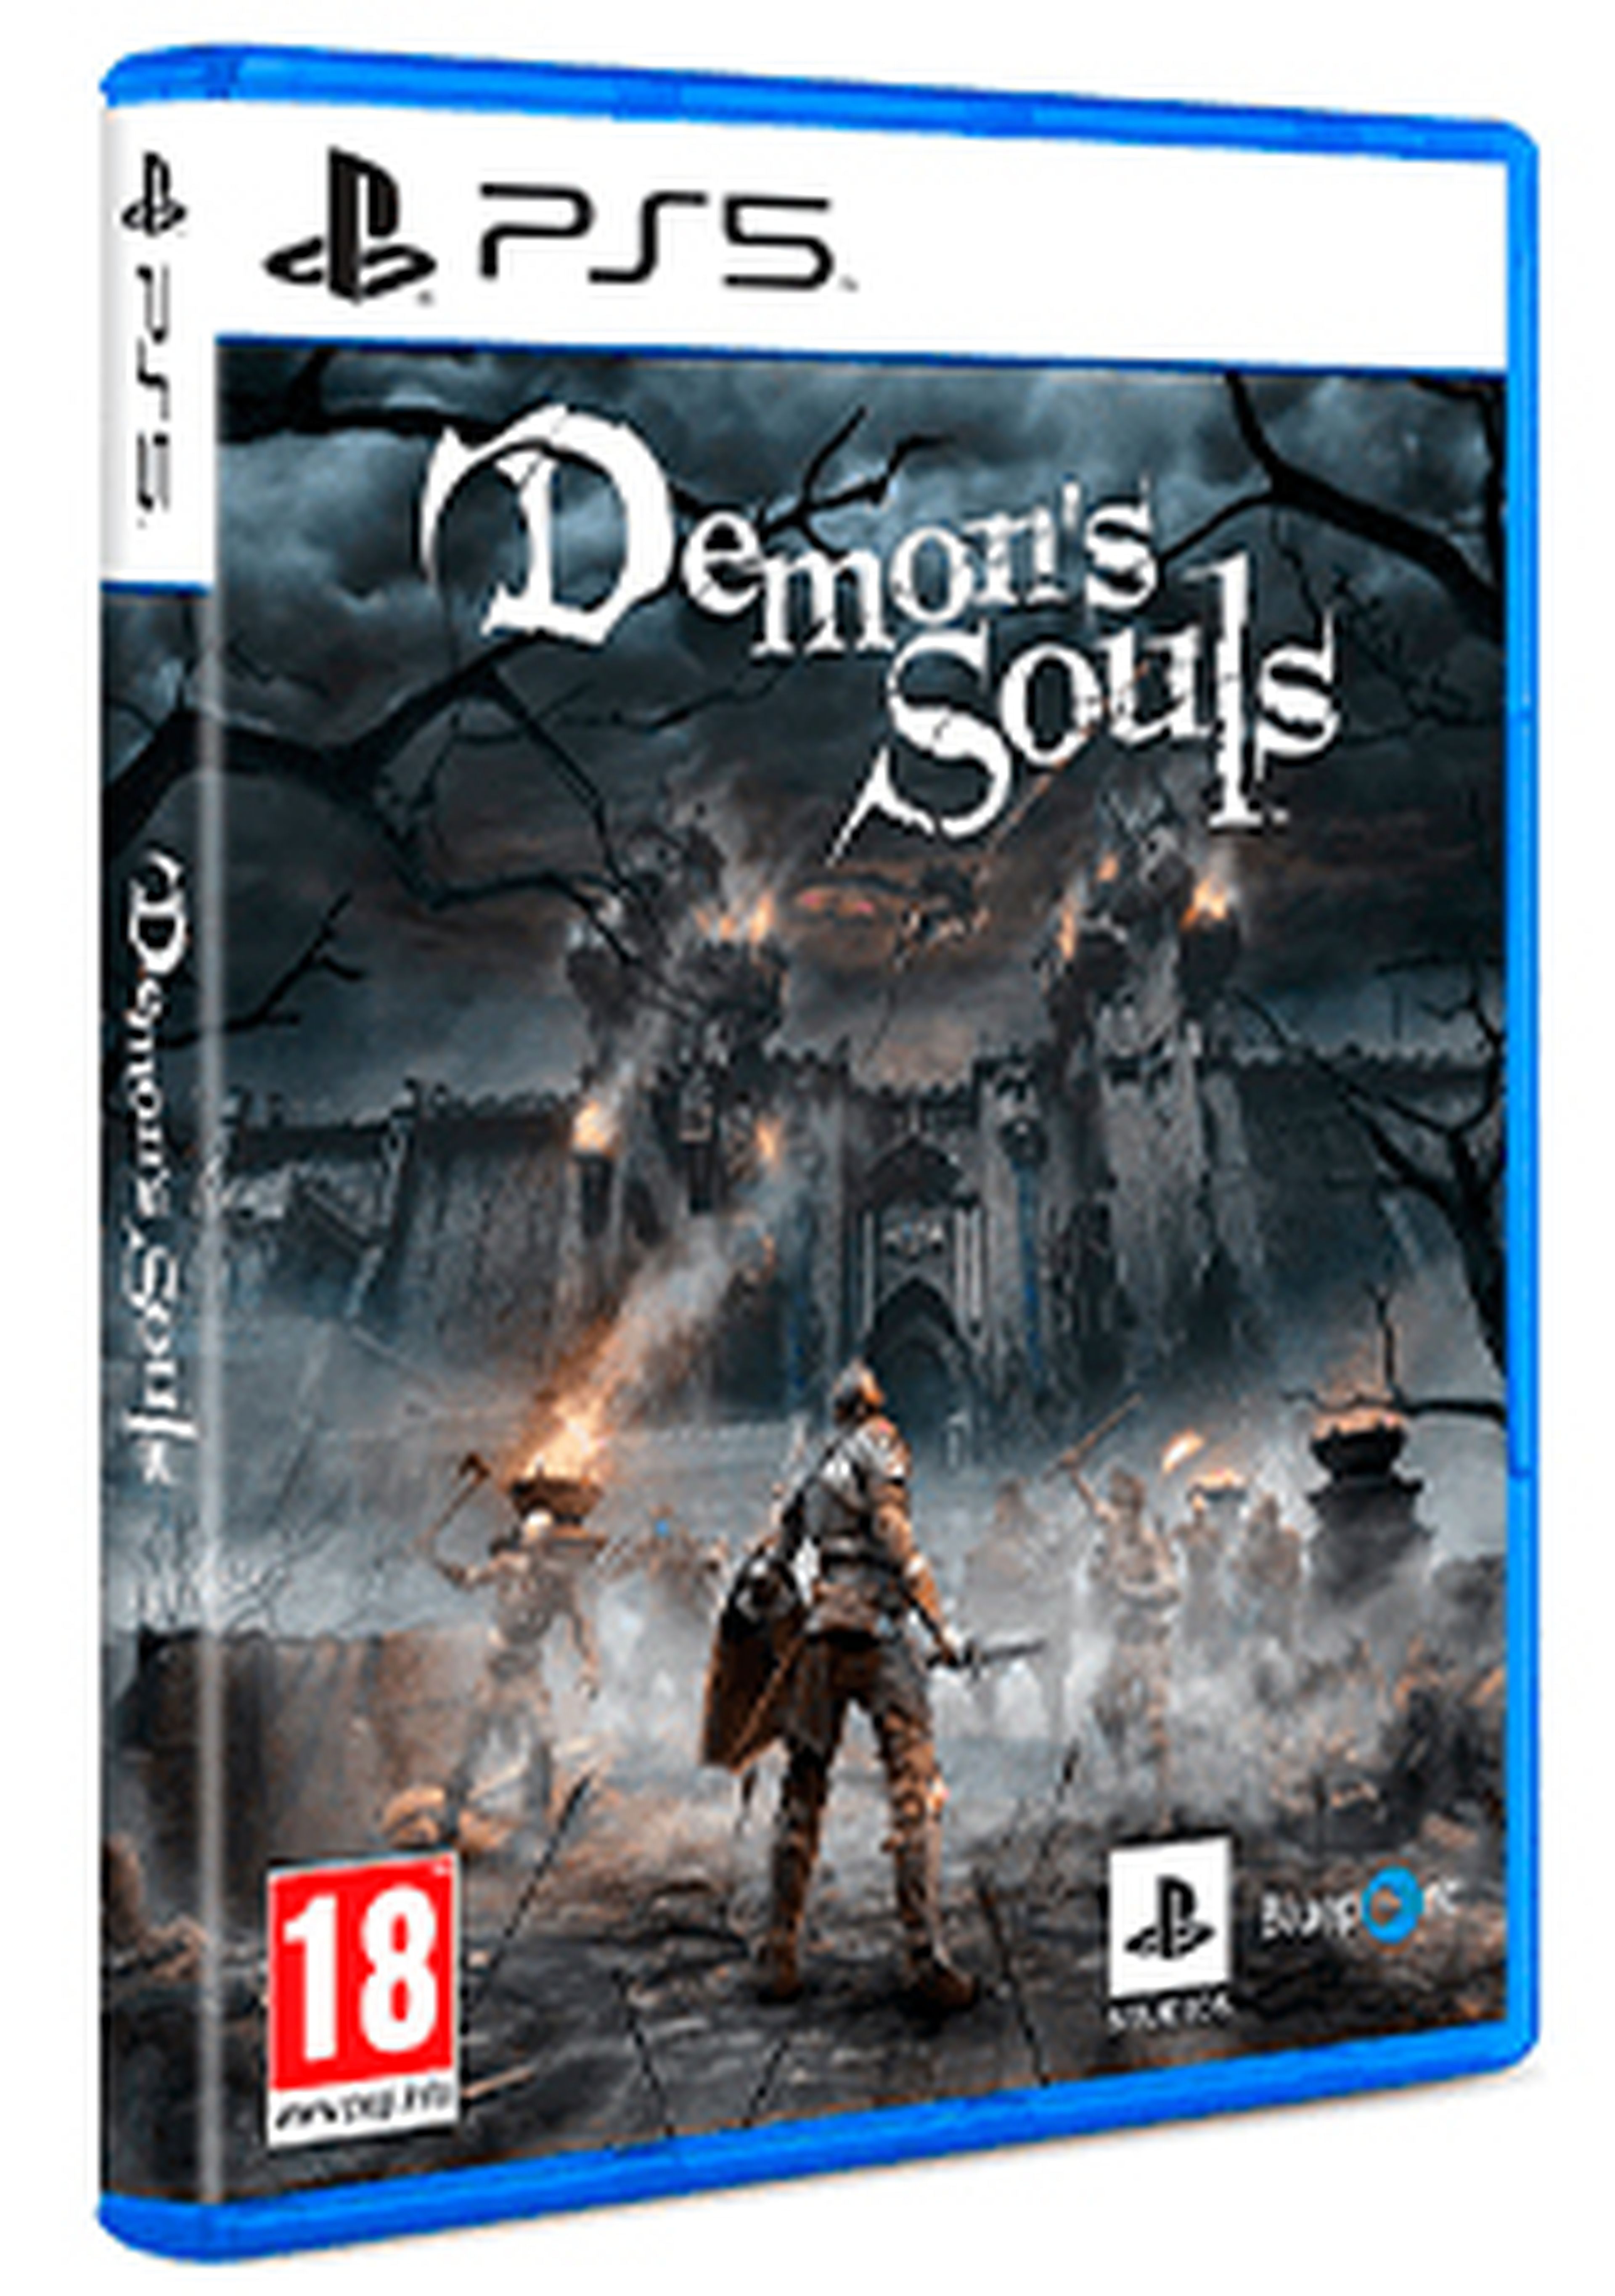 PROMO GAME PS5 HALLOWEEN demons souls